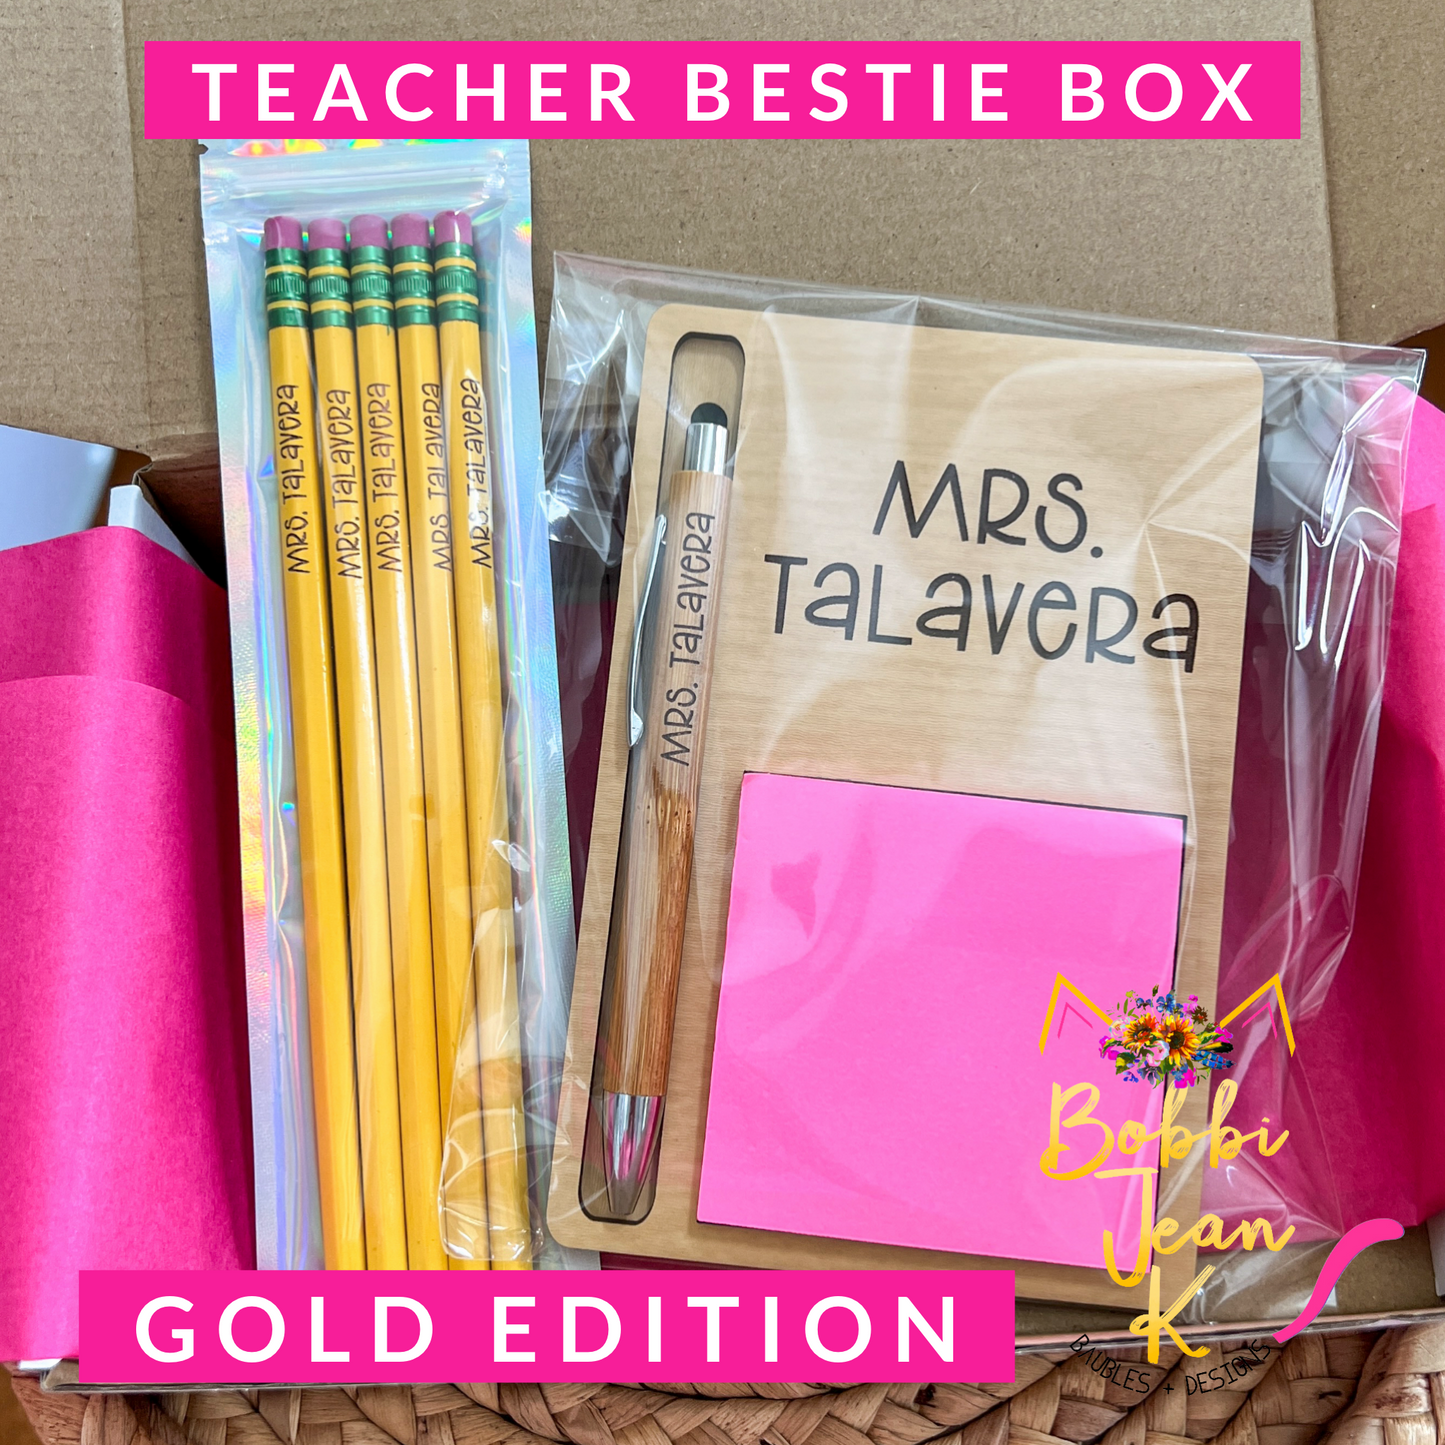 Teacher Bestie Box: GOLD EDITION